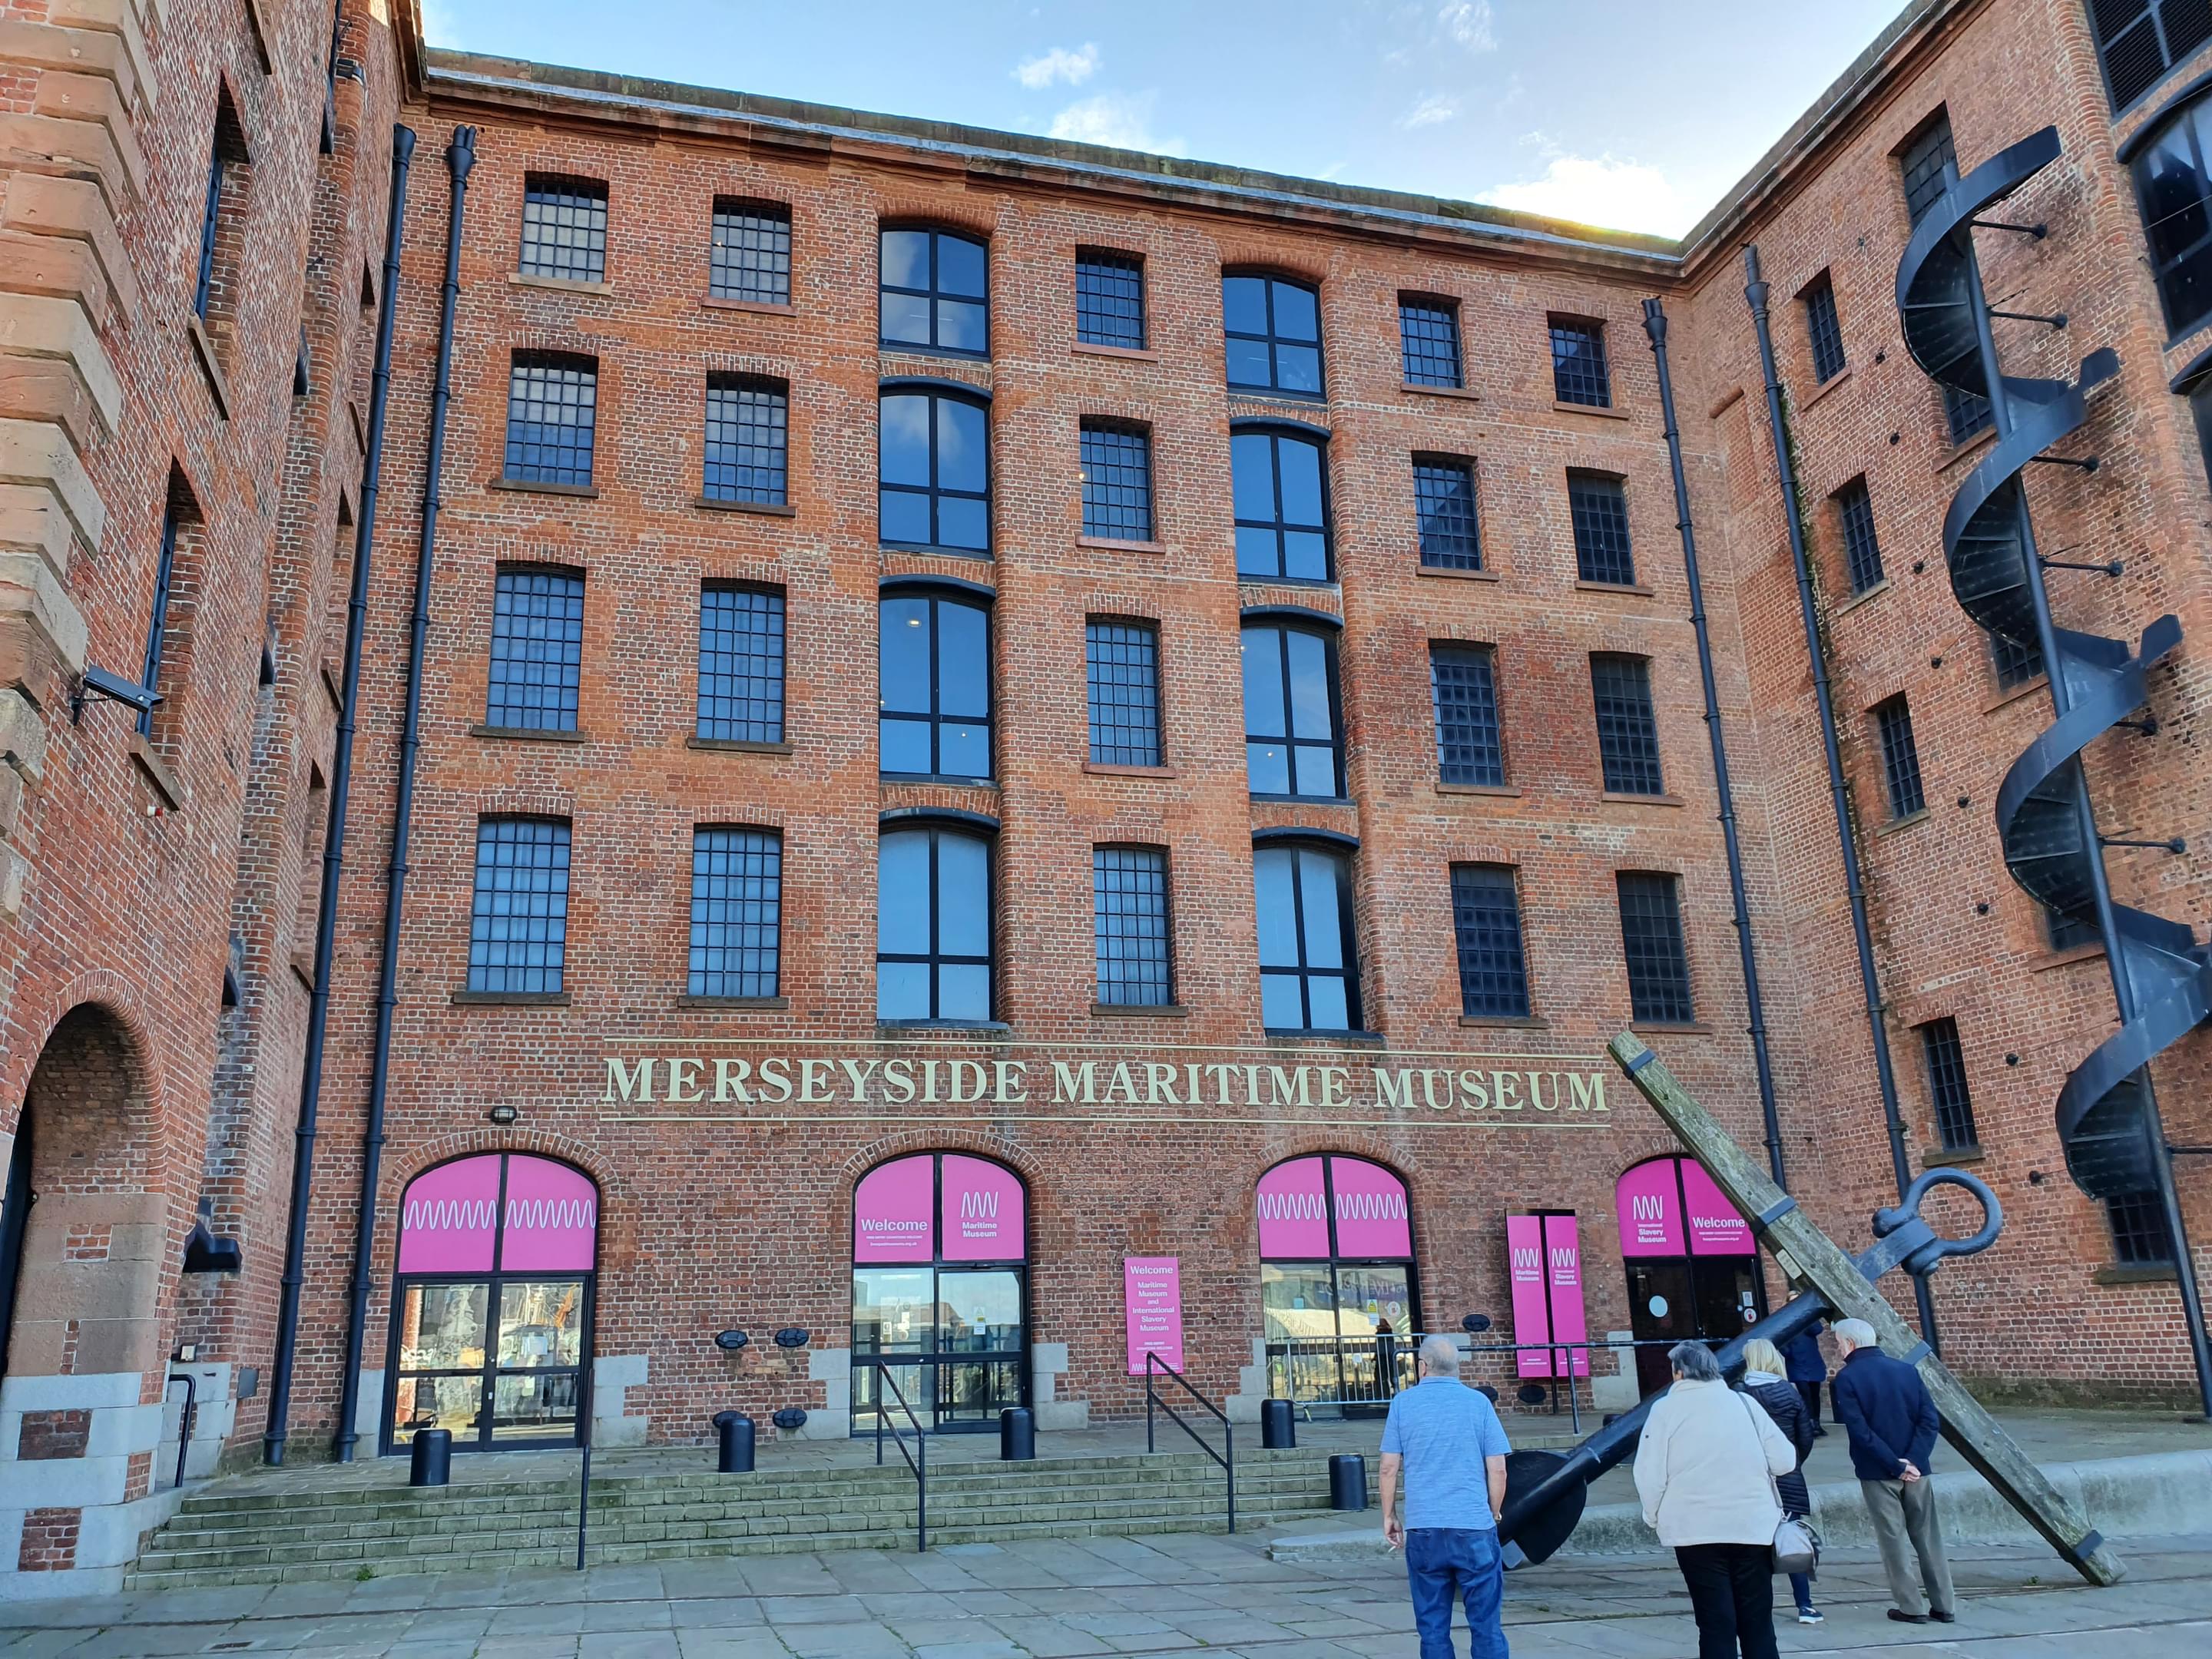 Merseyside Maritime Museum Overview